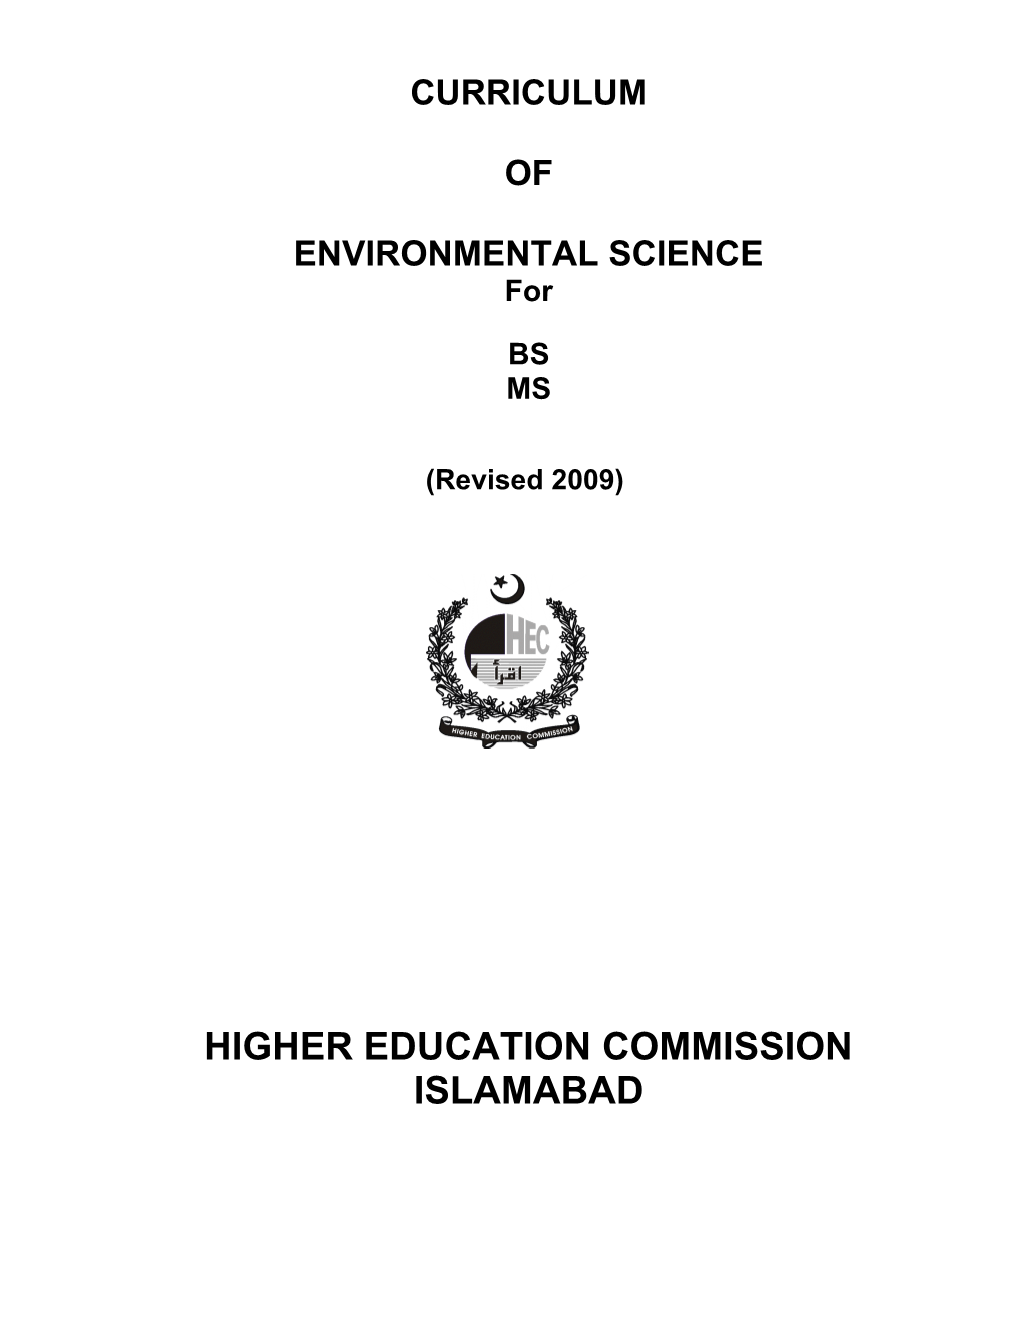 Programmes In Environmental Sciences